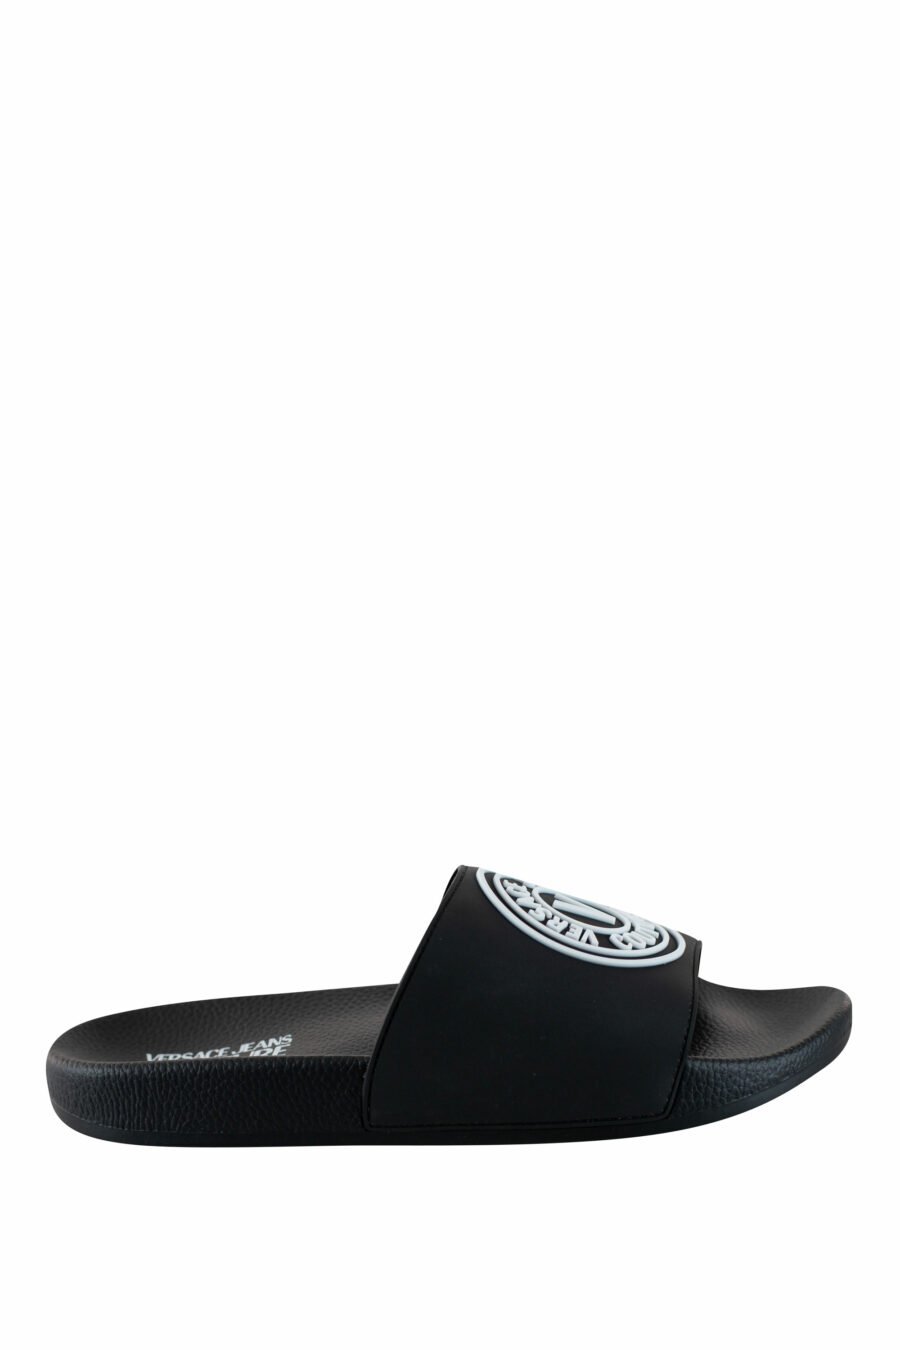 Schwarze Flip Flops mit schwarzem kreisförmigen Maxilogo - IMG 4425